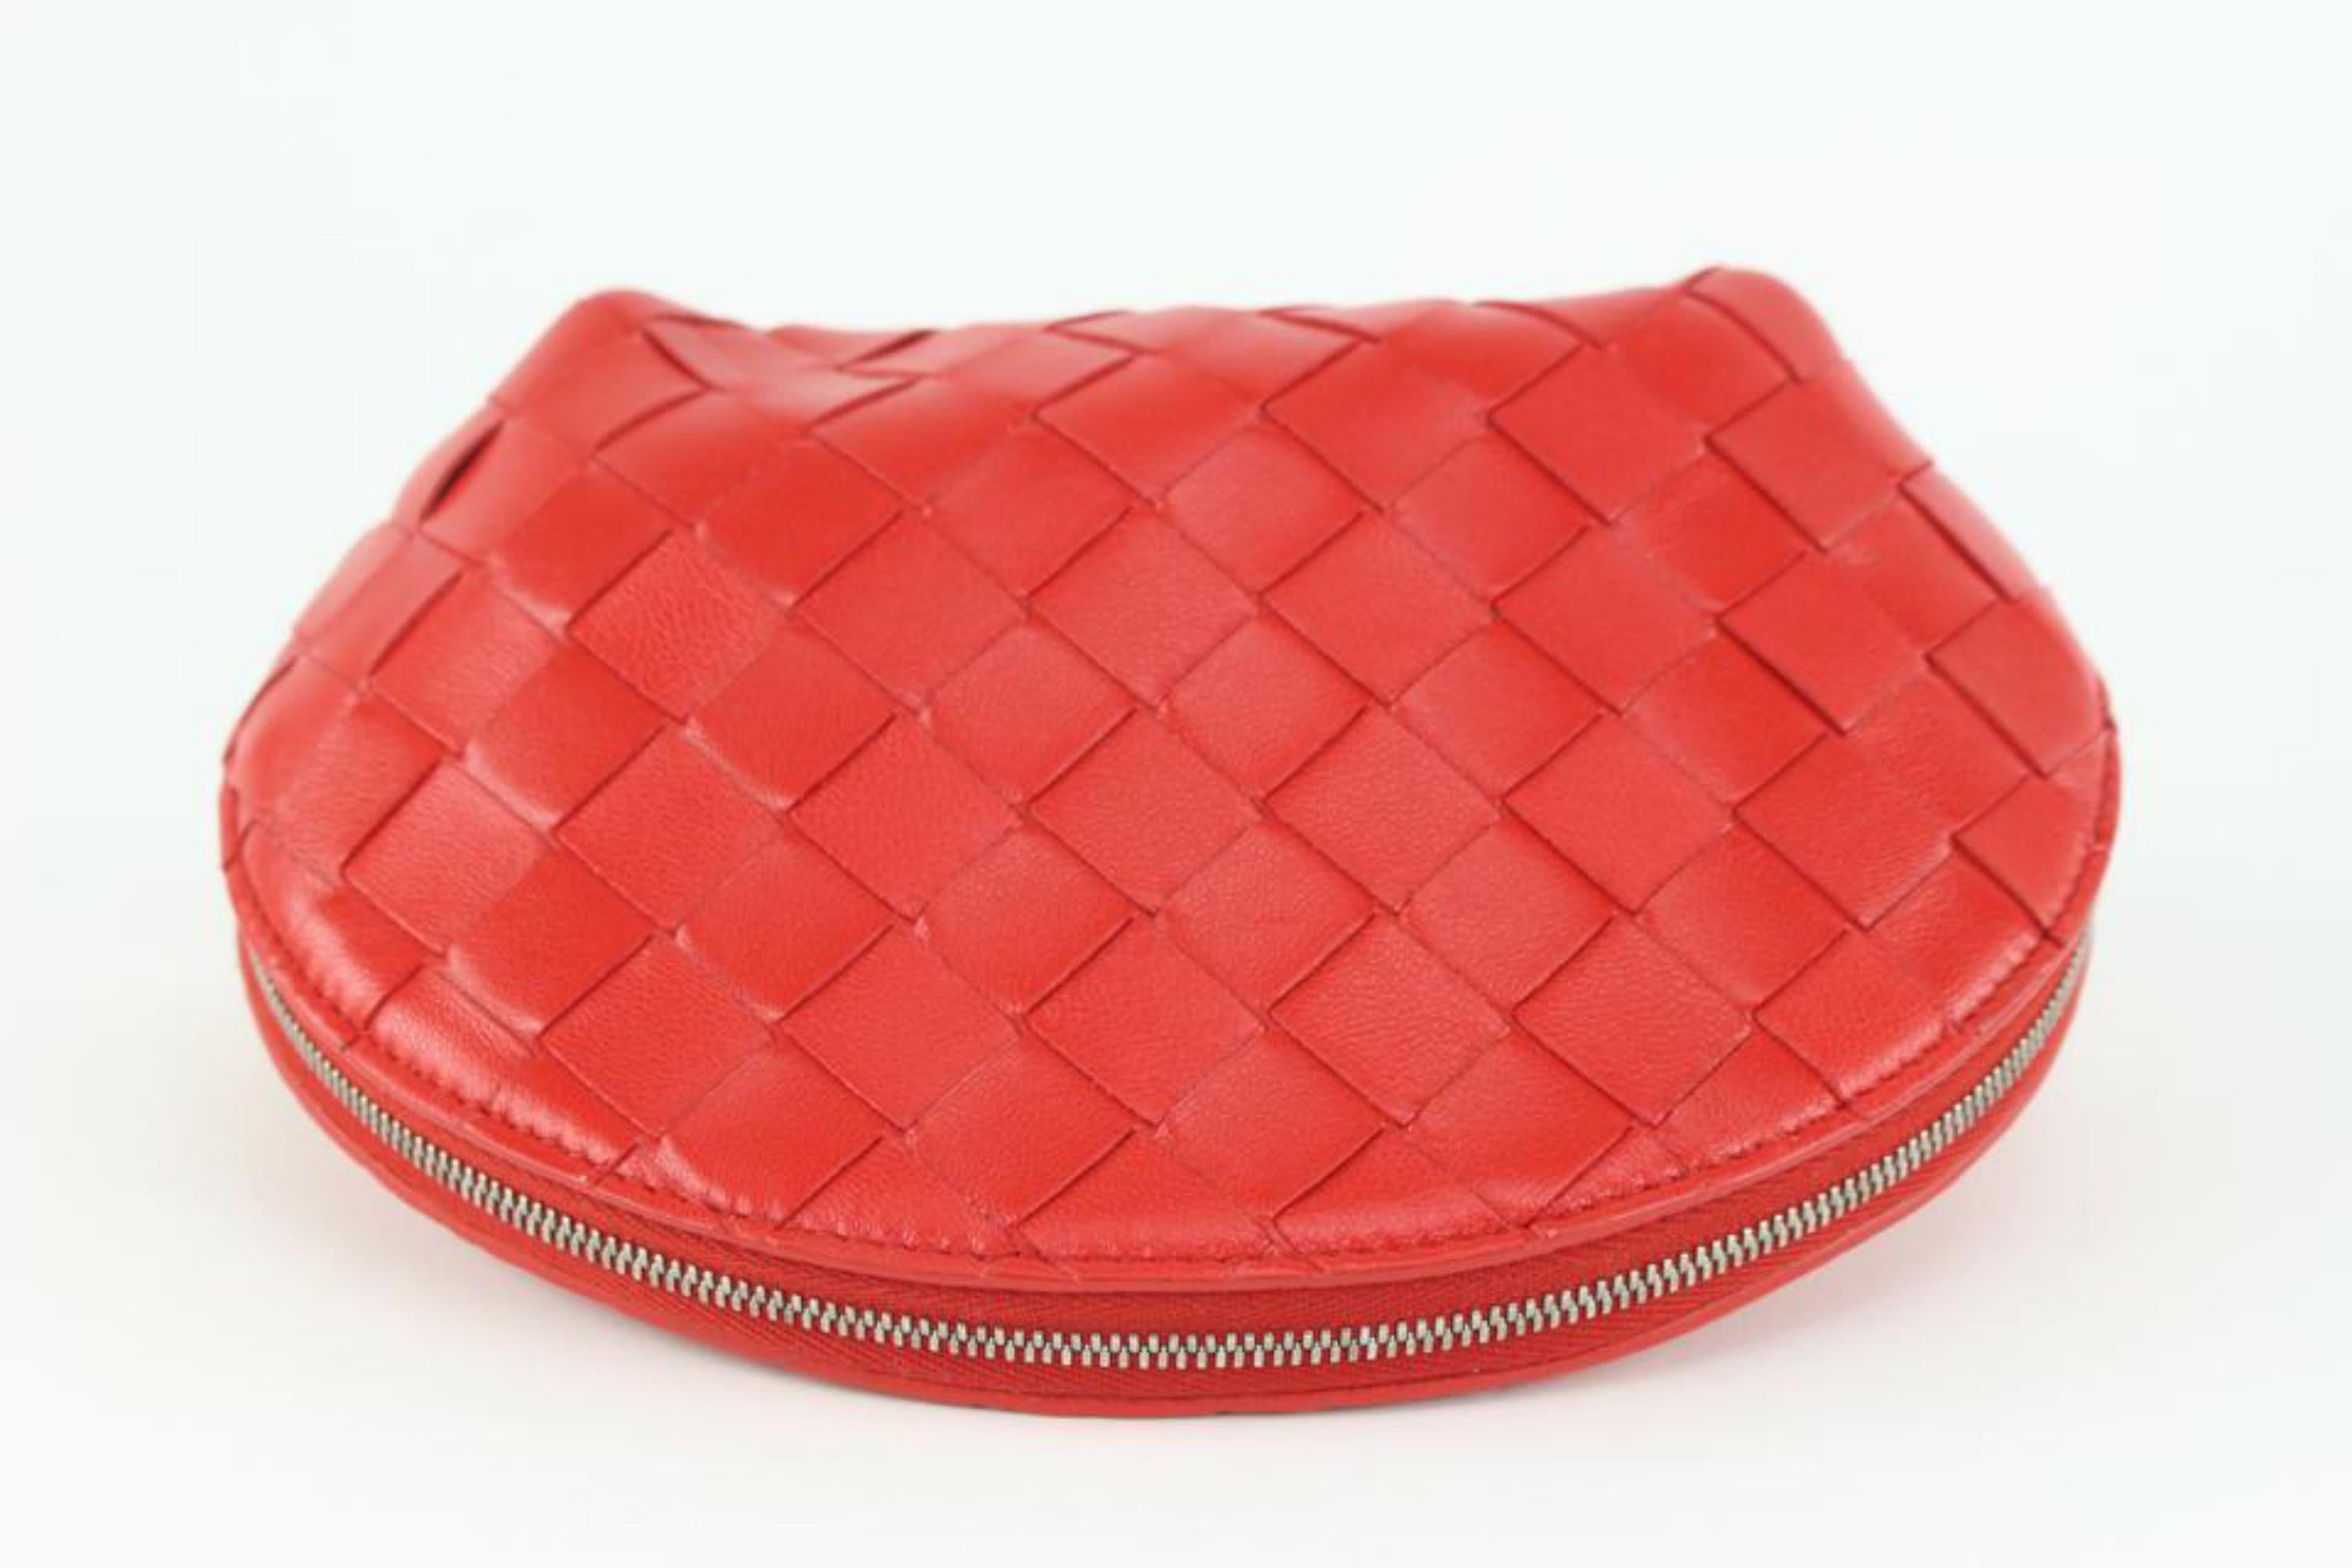 Bottega Veneta Red Intrecciato Leather Oval Cosmetic Pouch Toiletry Case 1123bv3 For Sale 3